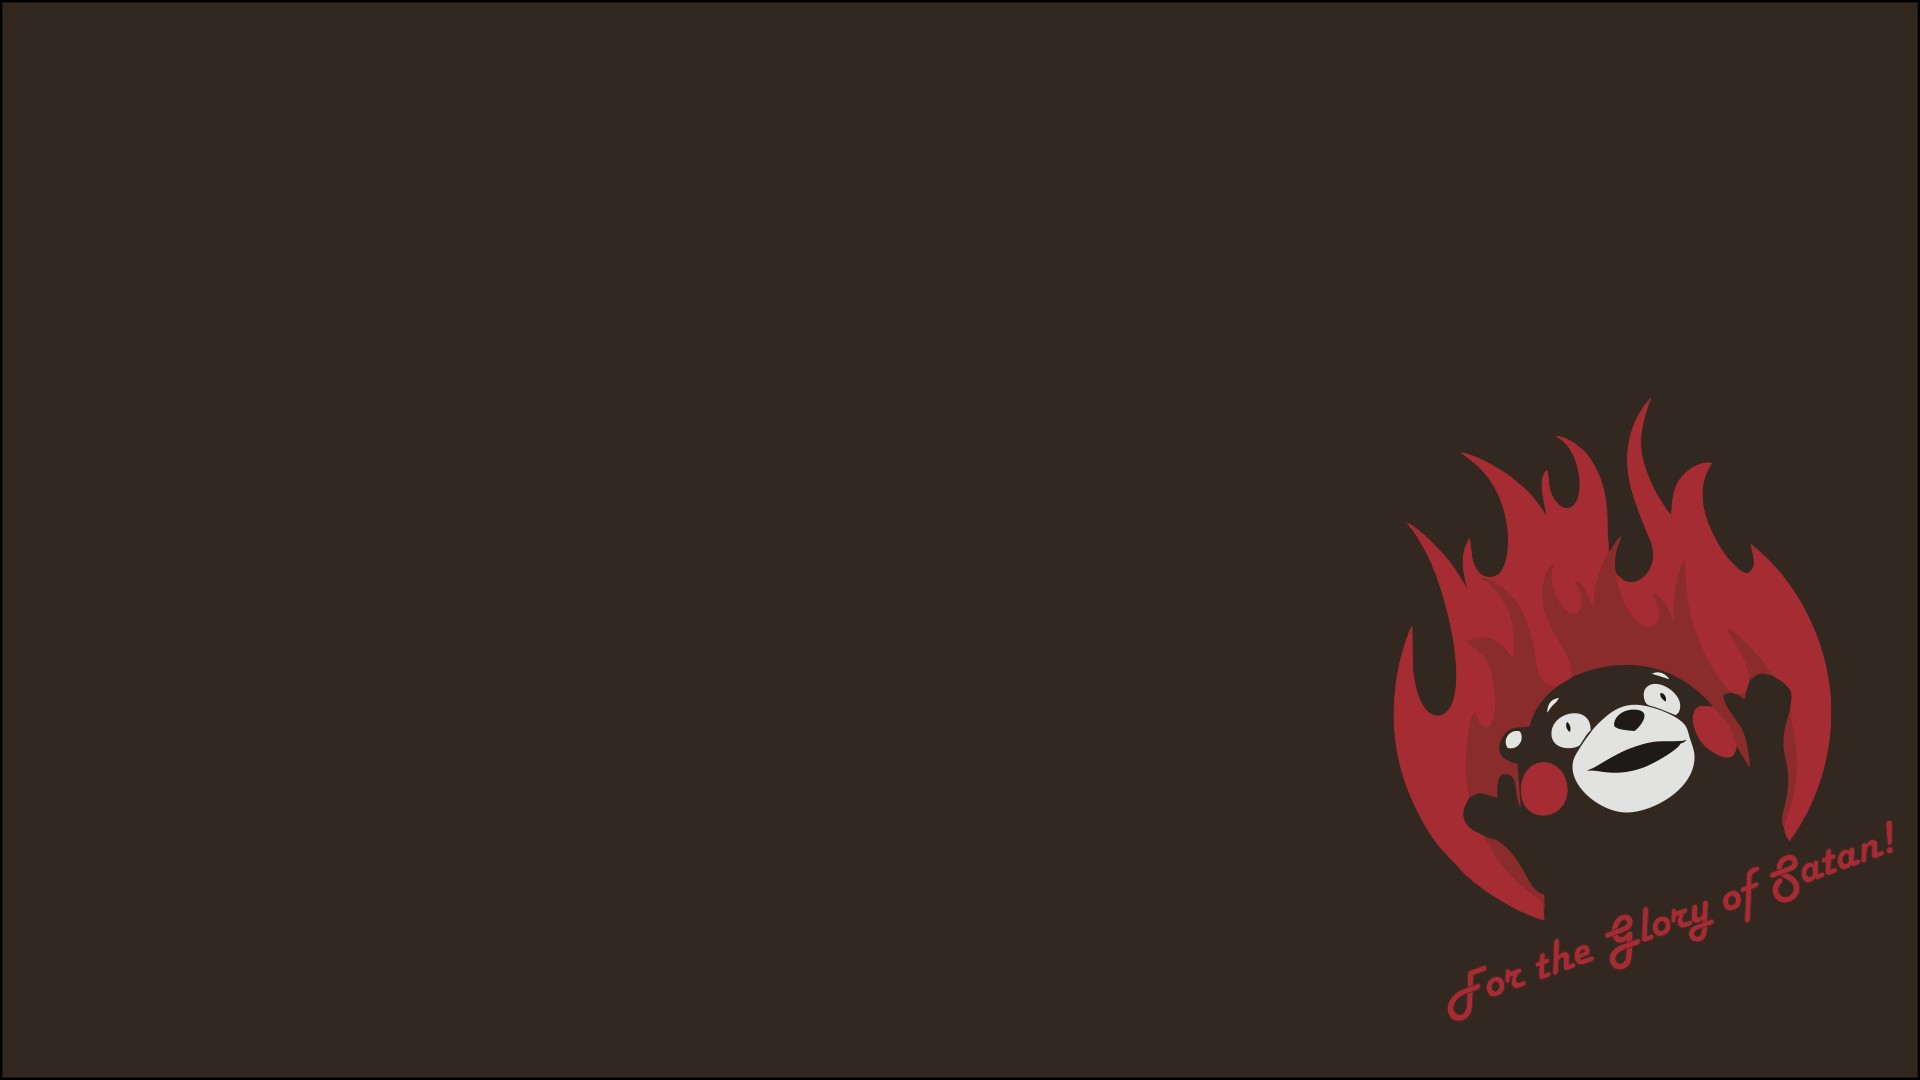 Satan kumamon fire wallpapers hd desktop and mobile backgrounds